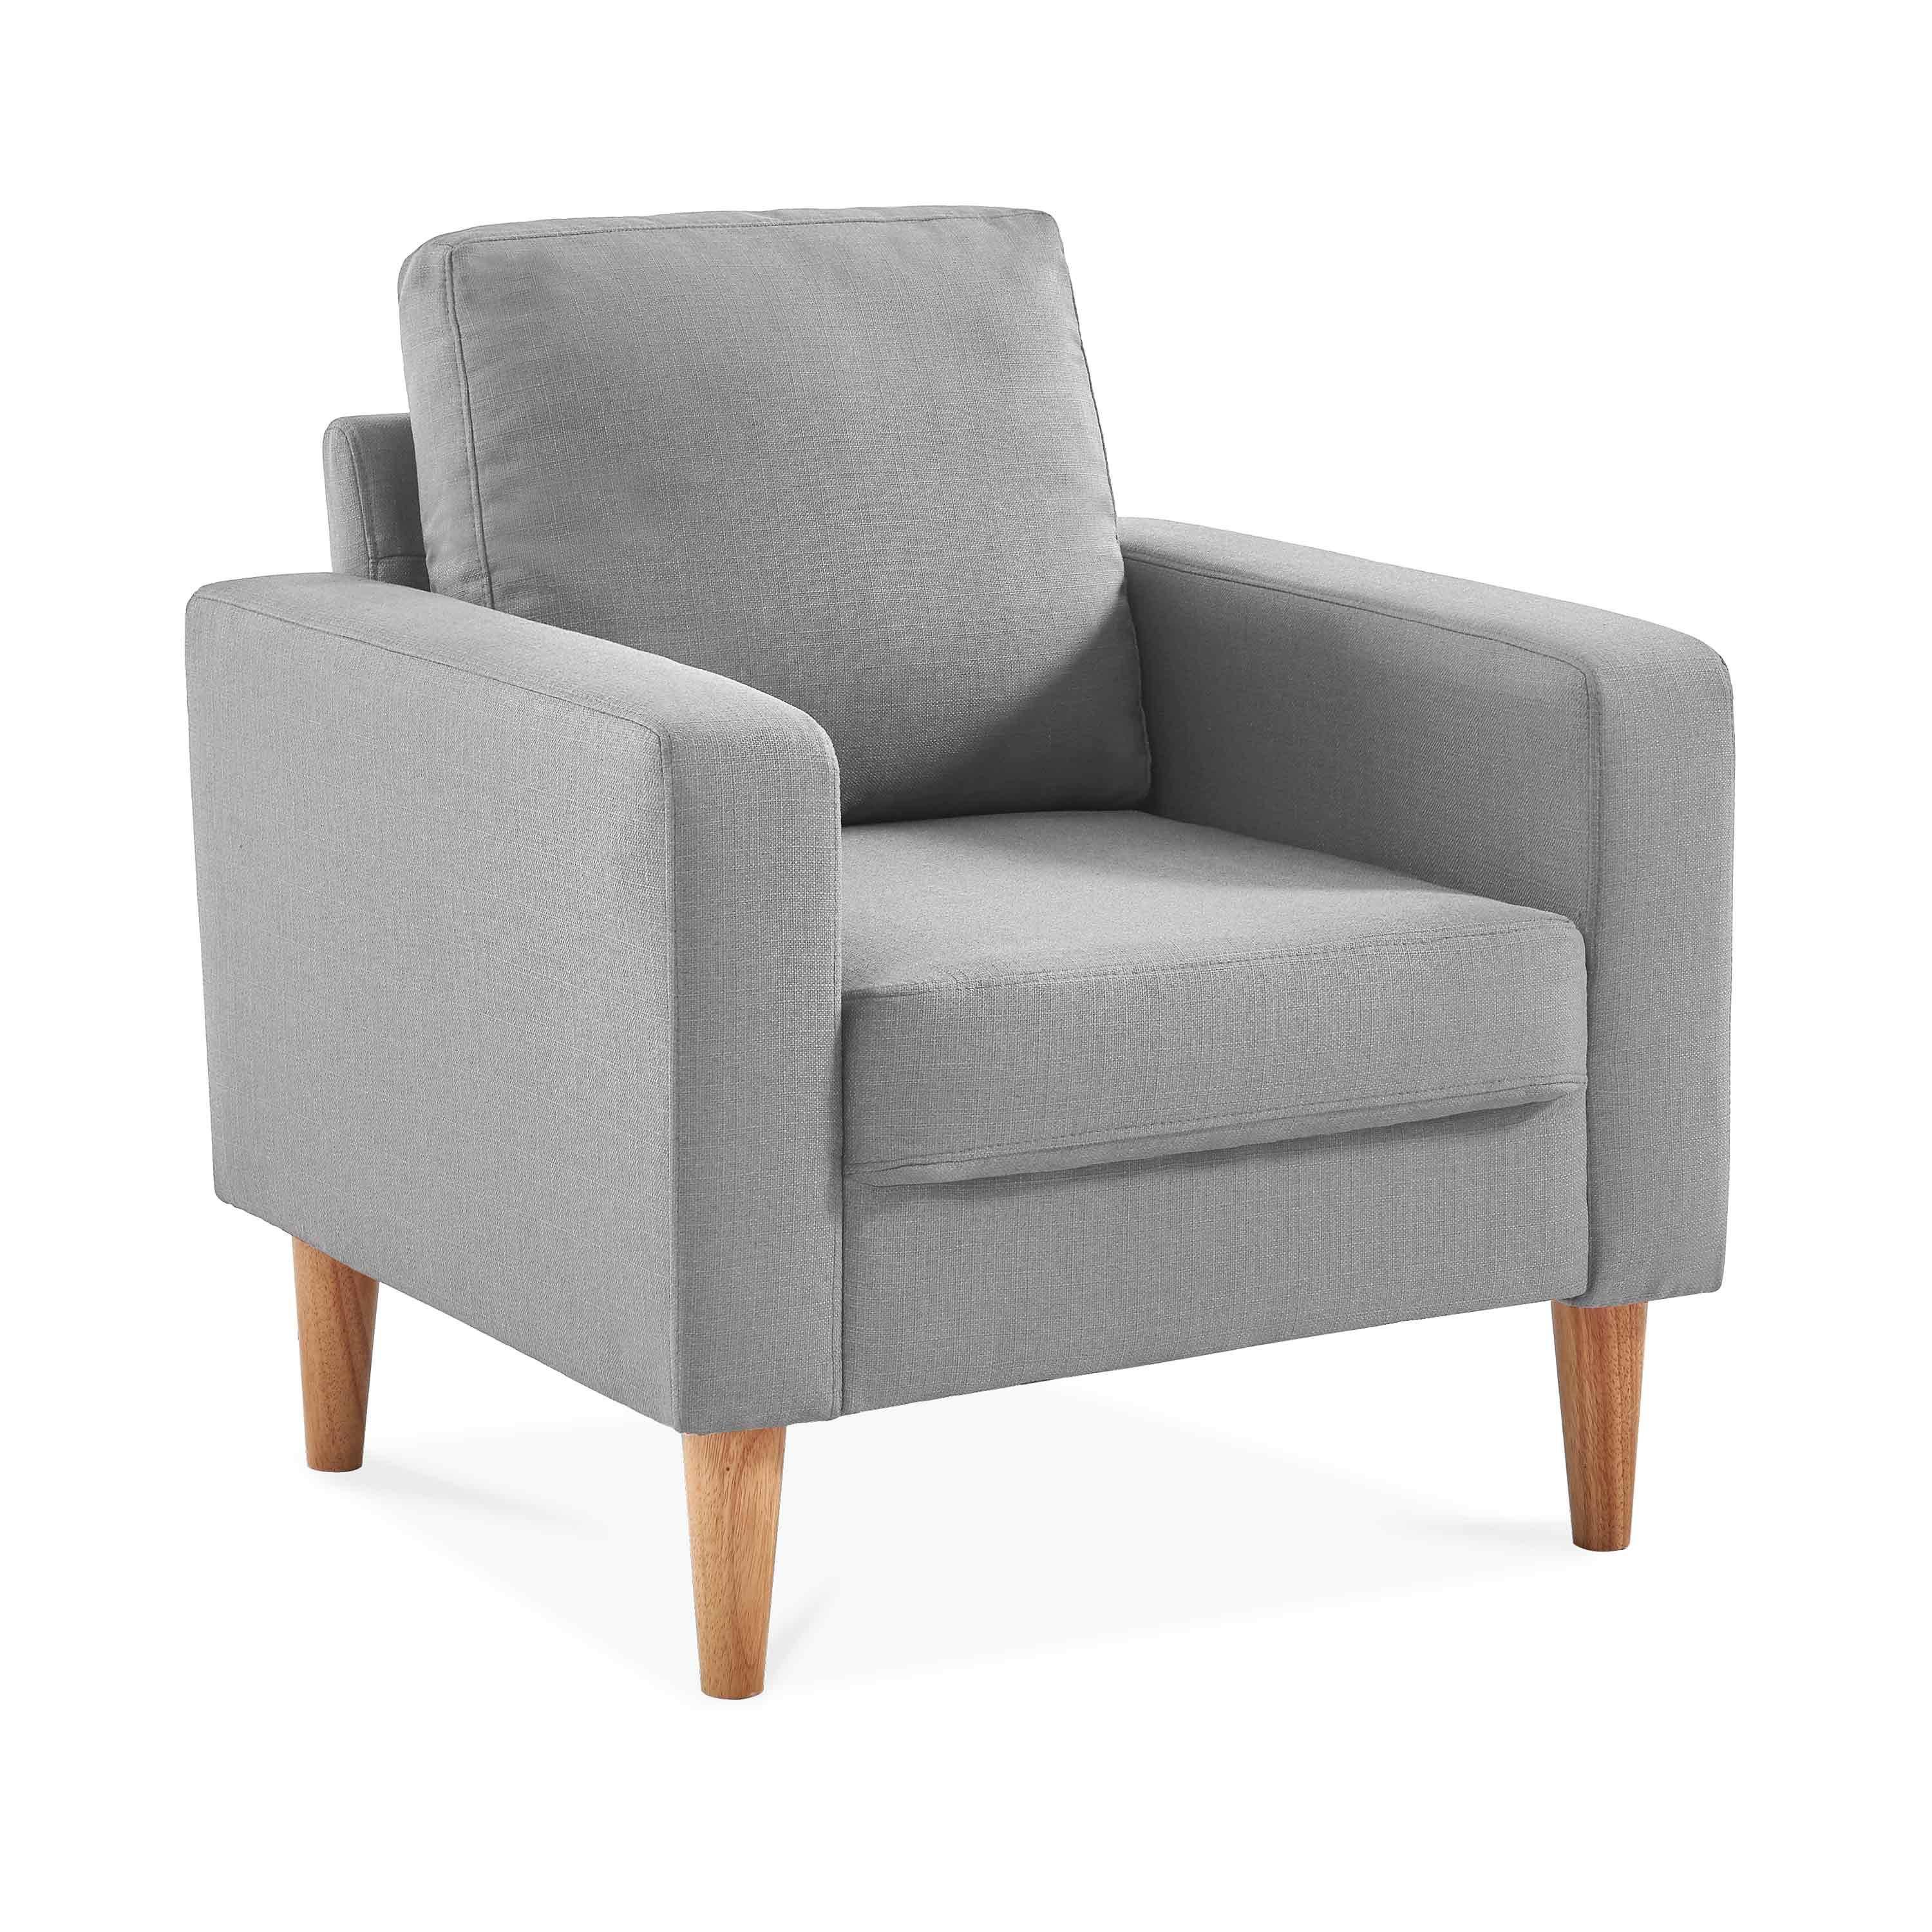 Scandi-style armchair with wooden legs - Bjorn - Light Grey Photo2